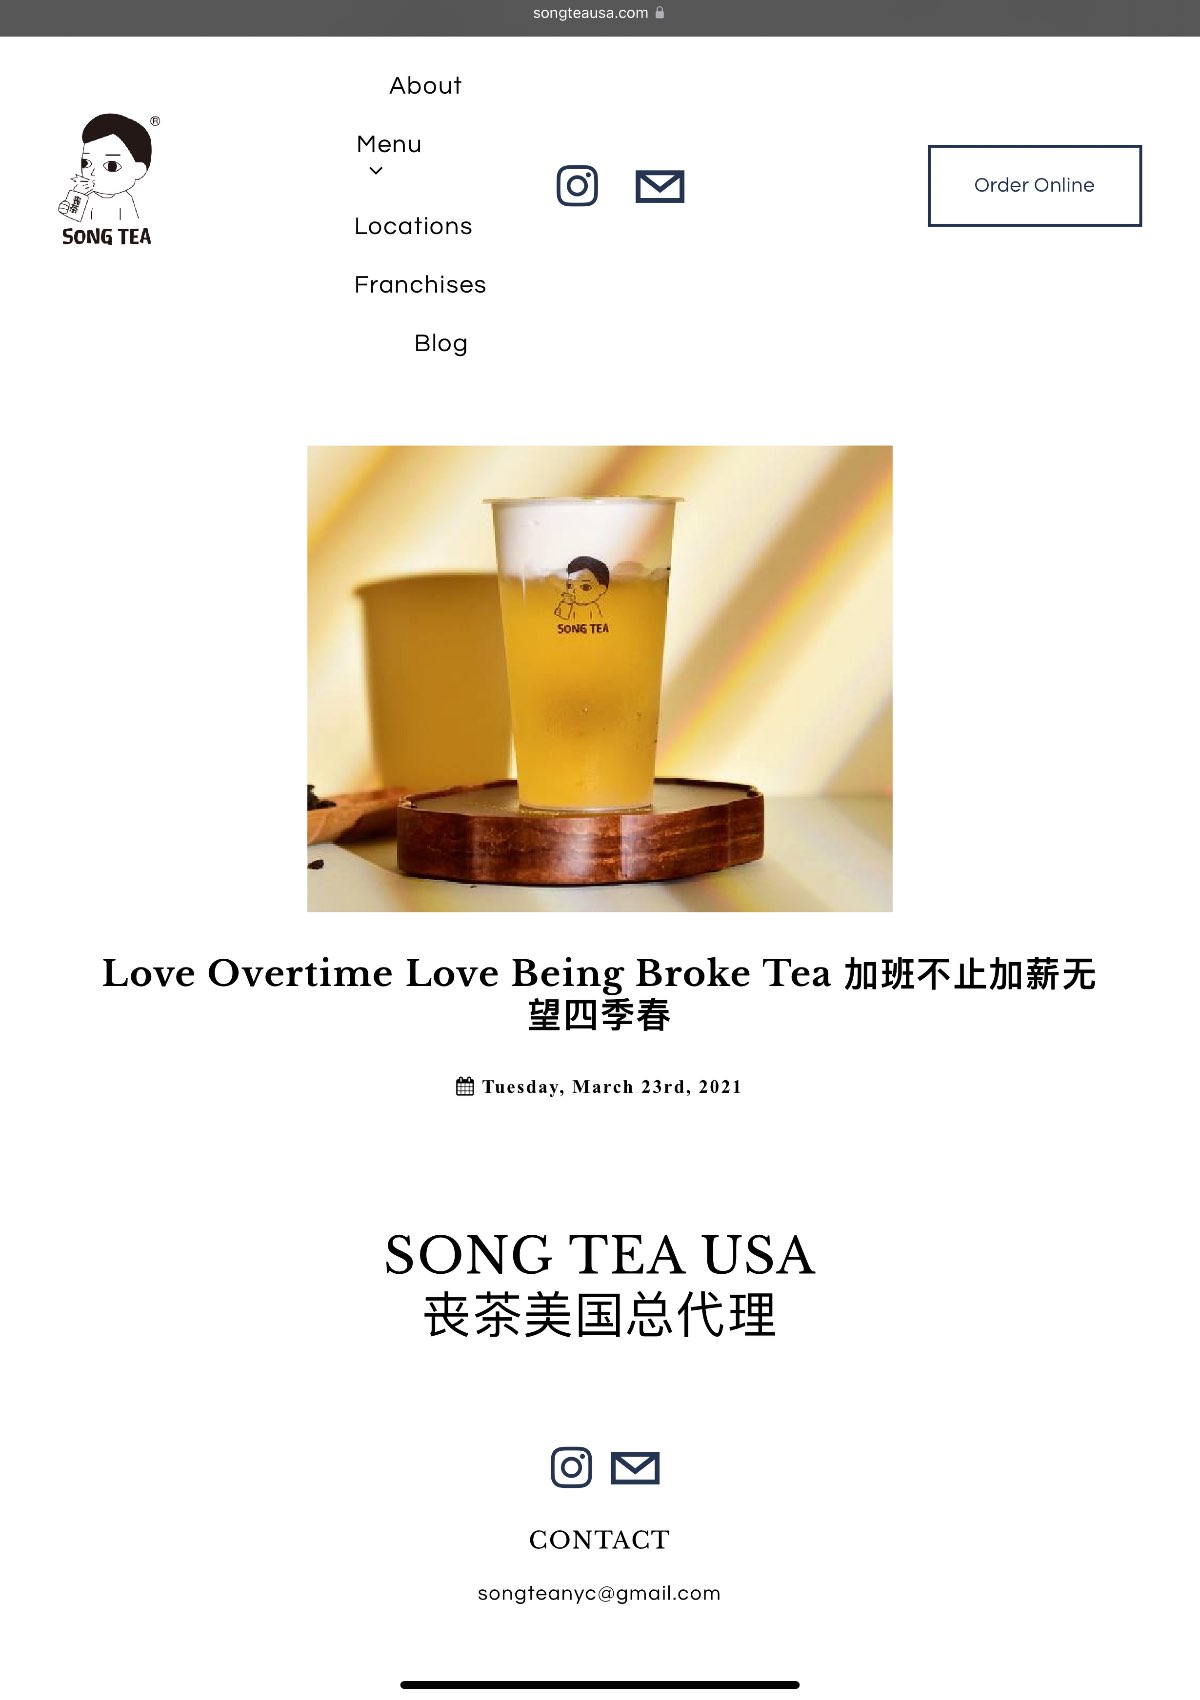 Screenshot of the blog post “Love Overtime Love Being Broke Tea 加班不止加薪无望四季春 - 丧茶美国总代理Song Tea”, on the Song Tea USA website